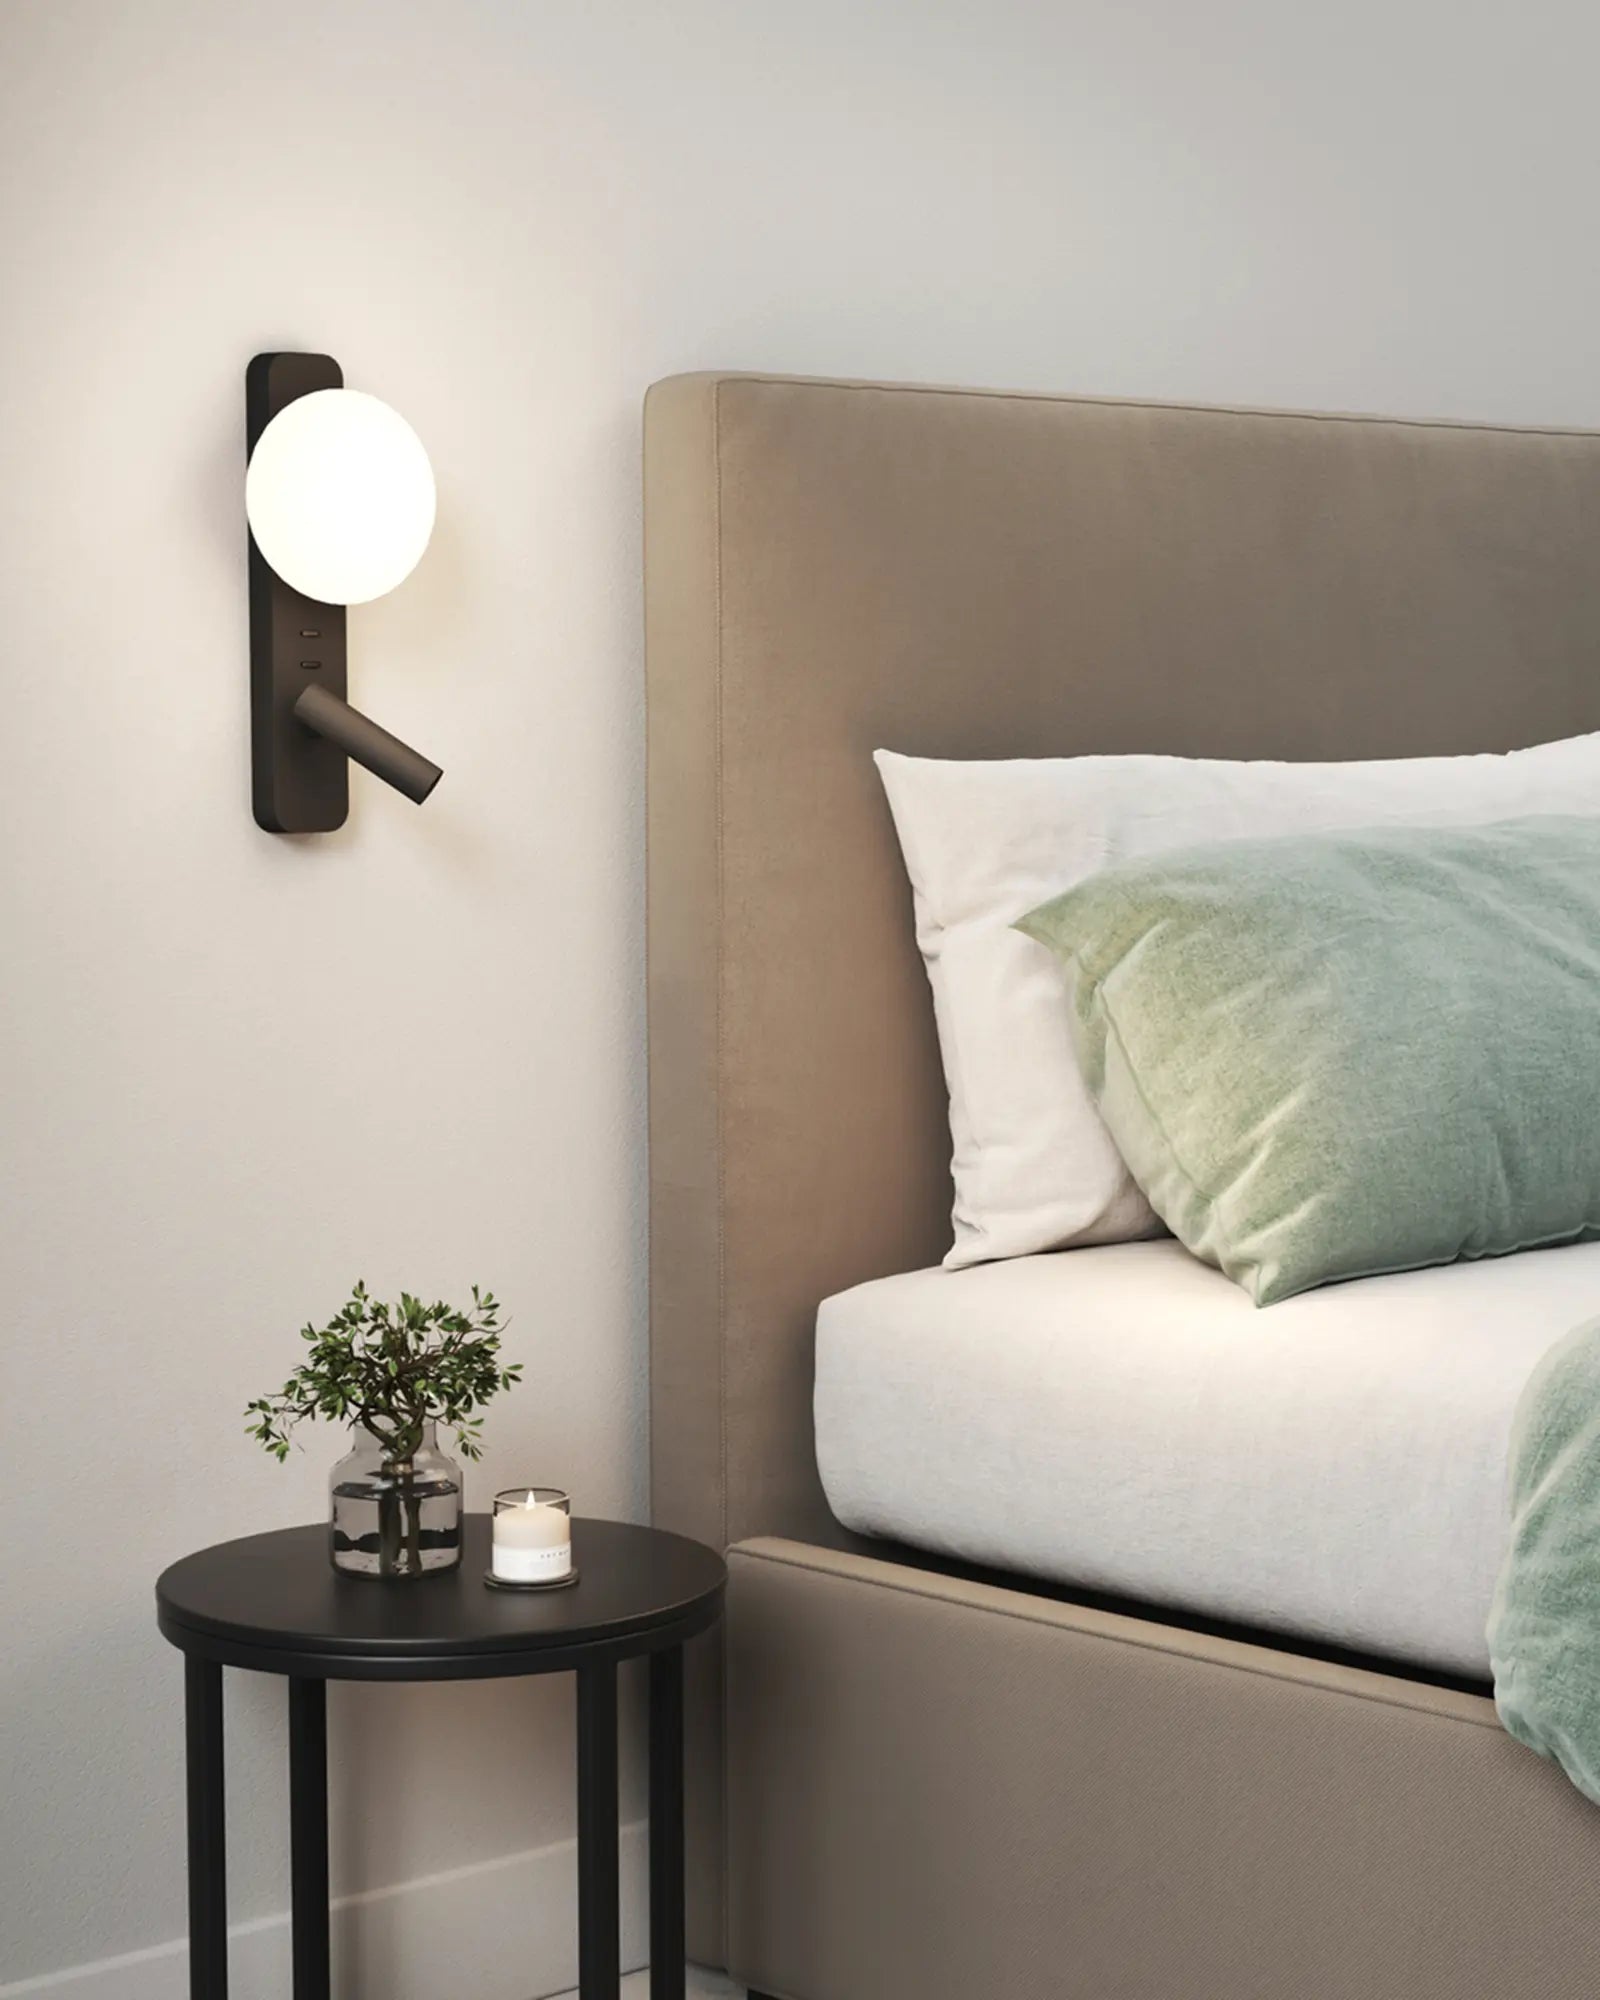 Zeppo reader orb ambient light and adjustable spot light in a bedroom